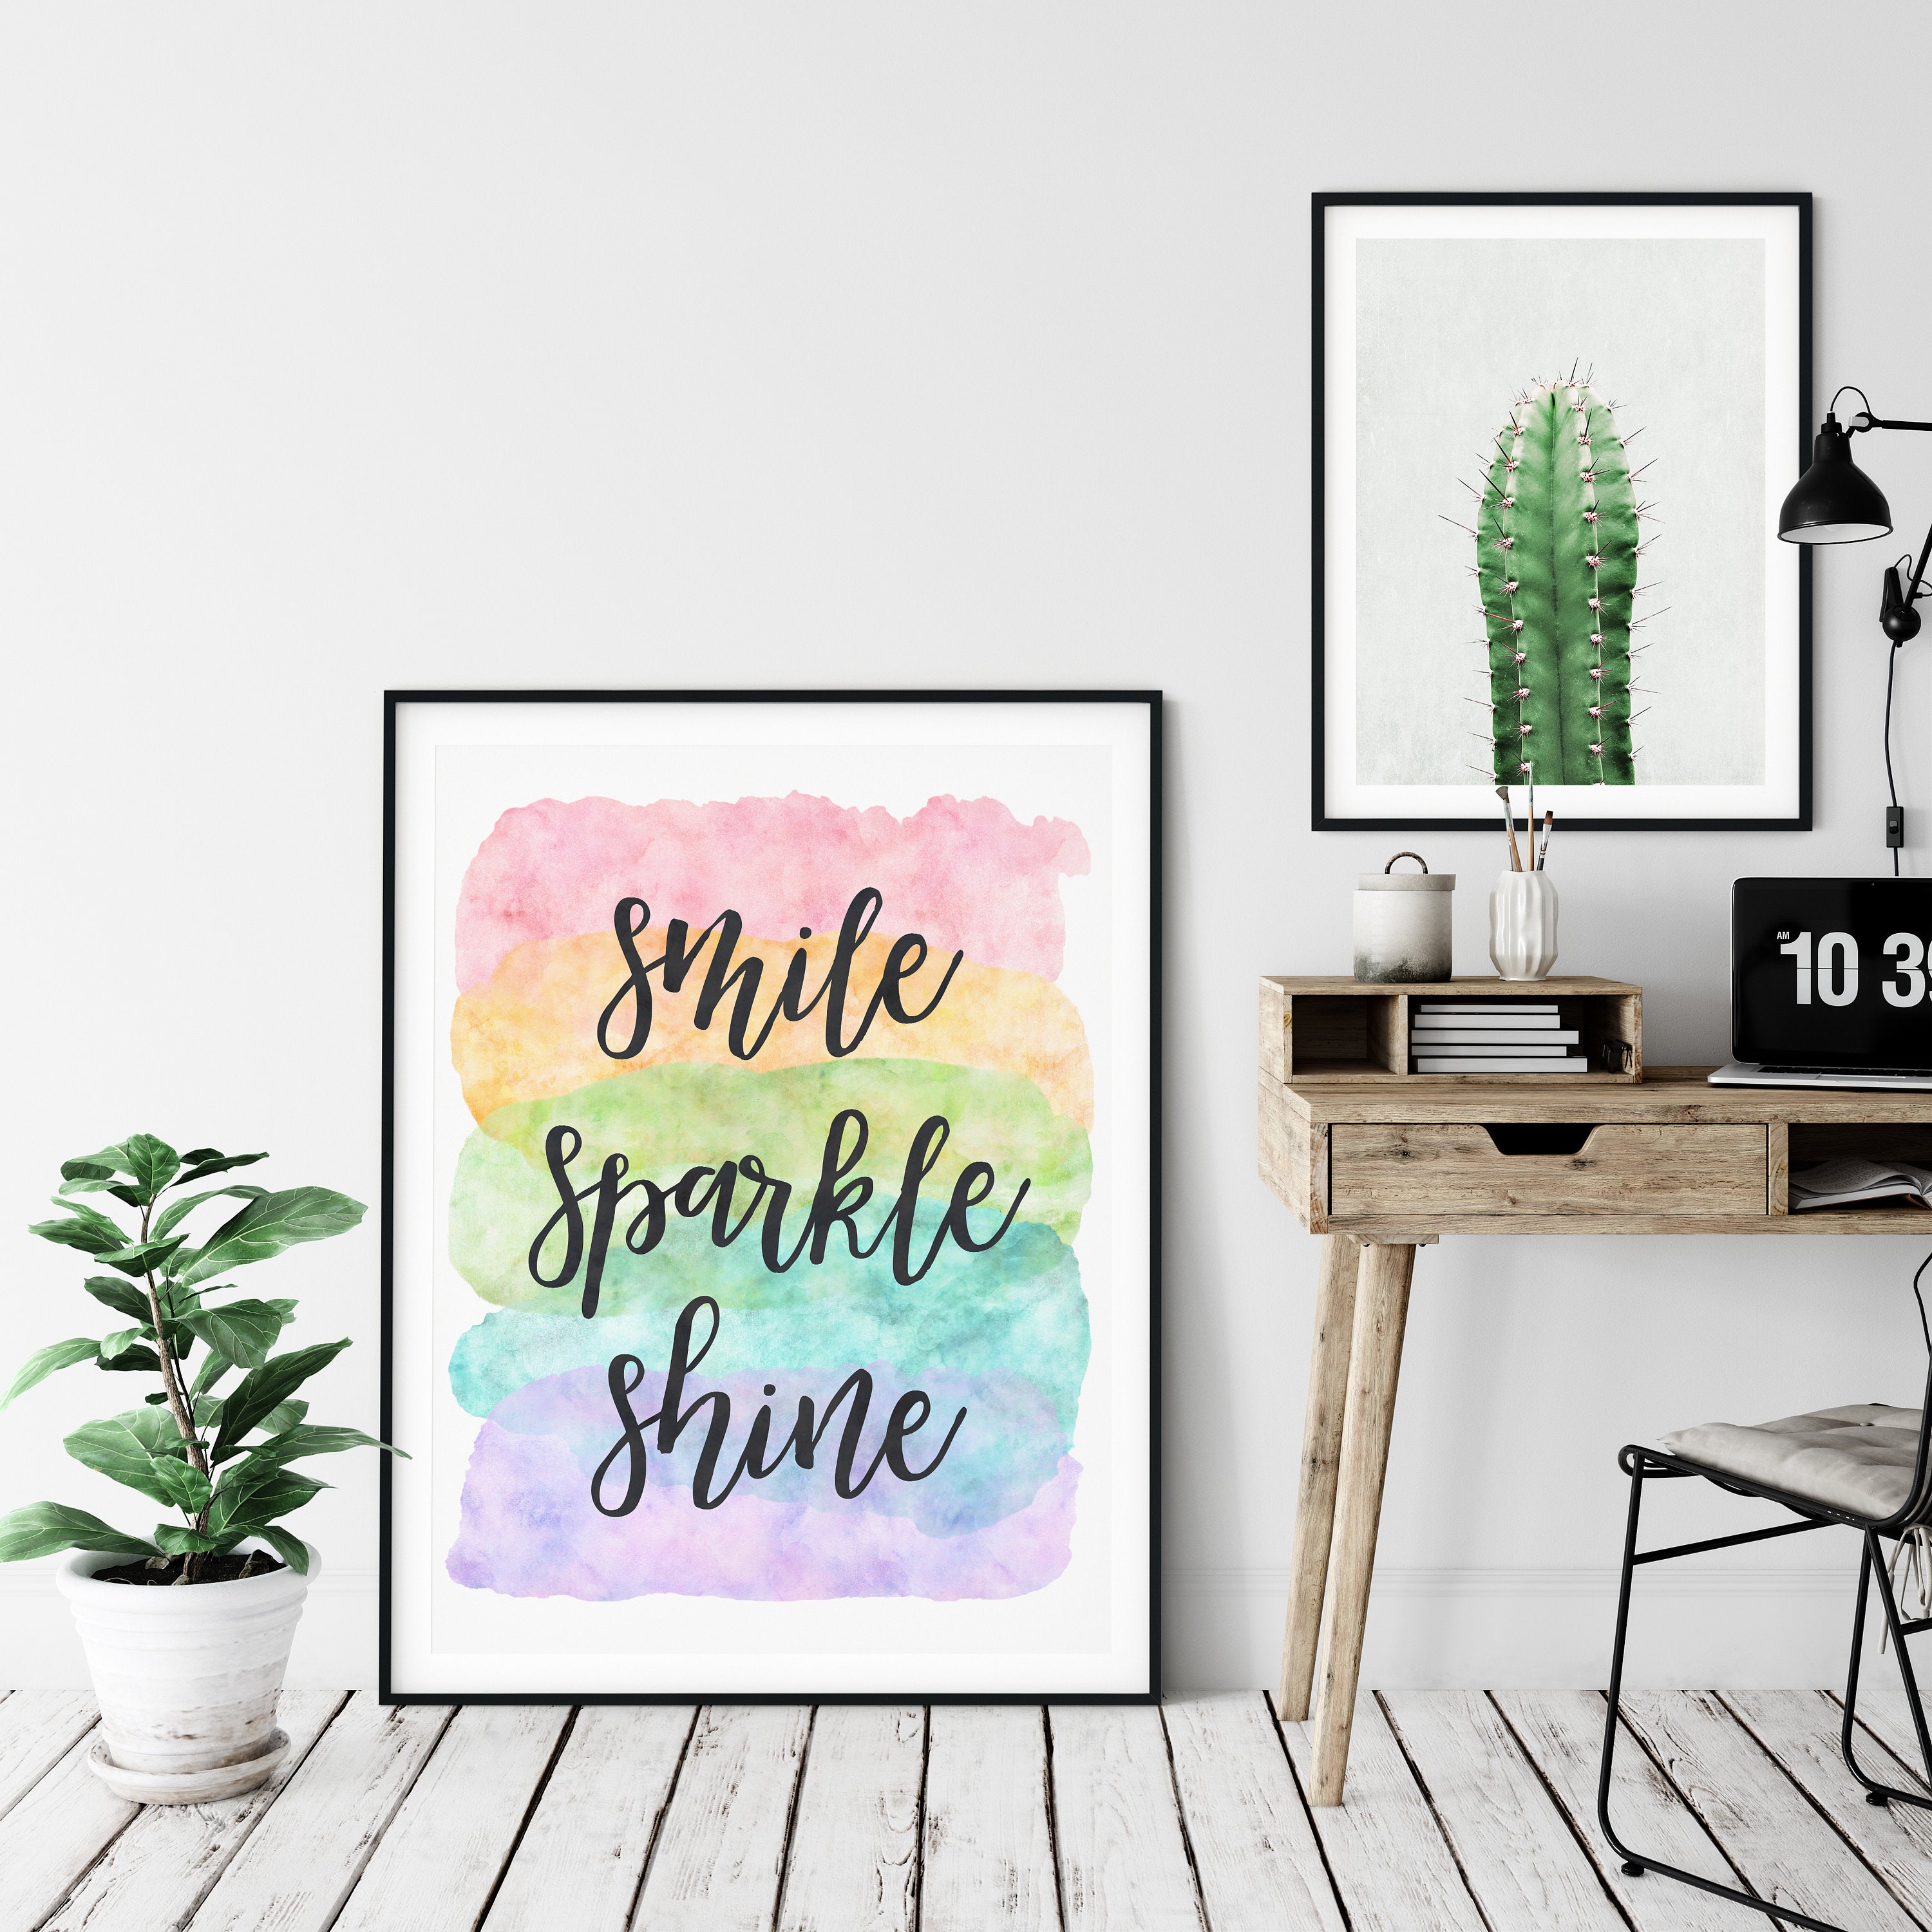 Smile Sparkle Shine,Nursery Print Wall Art,Inspirational Quotes,Motivational